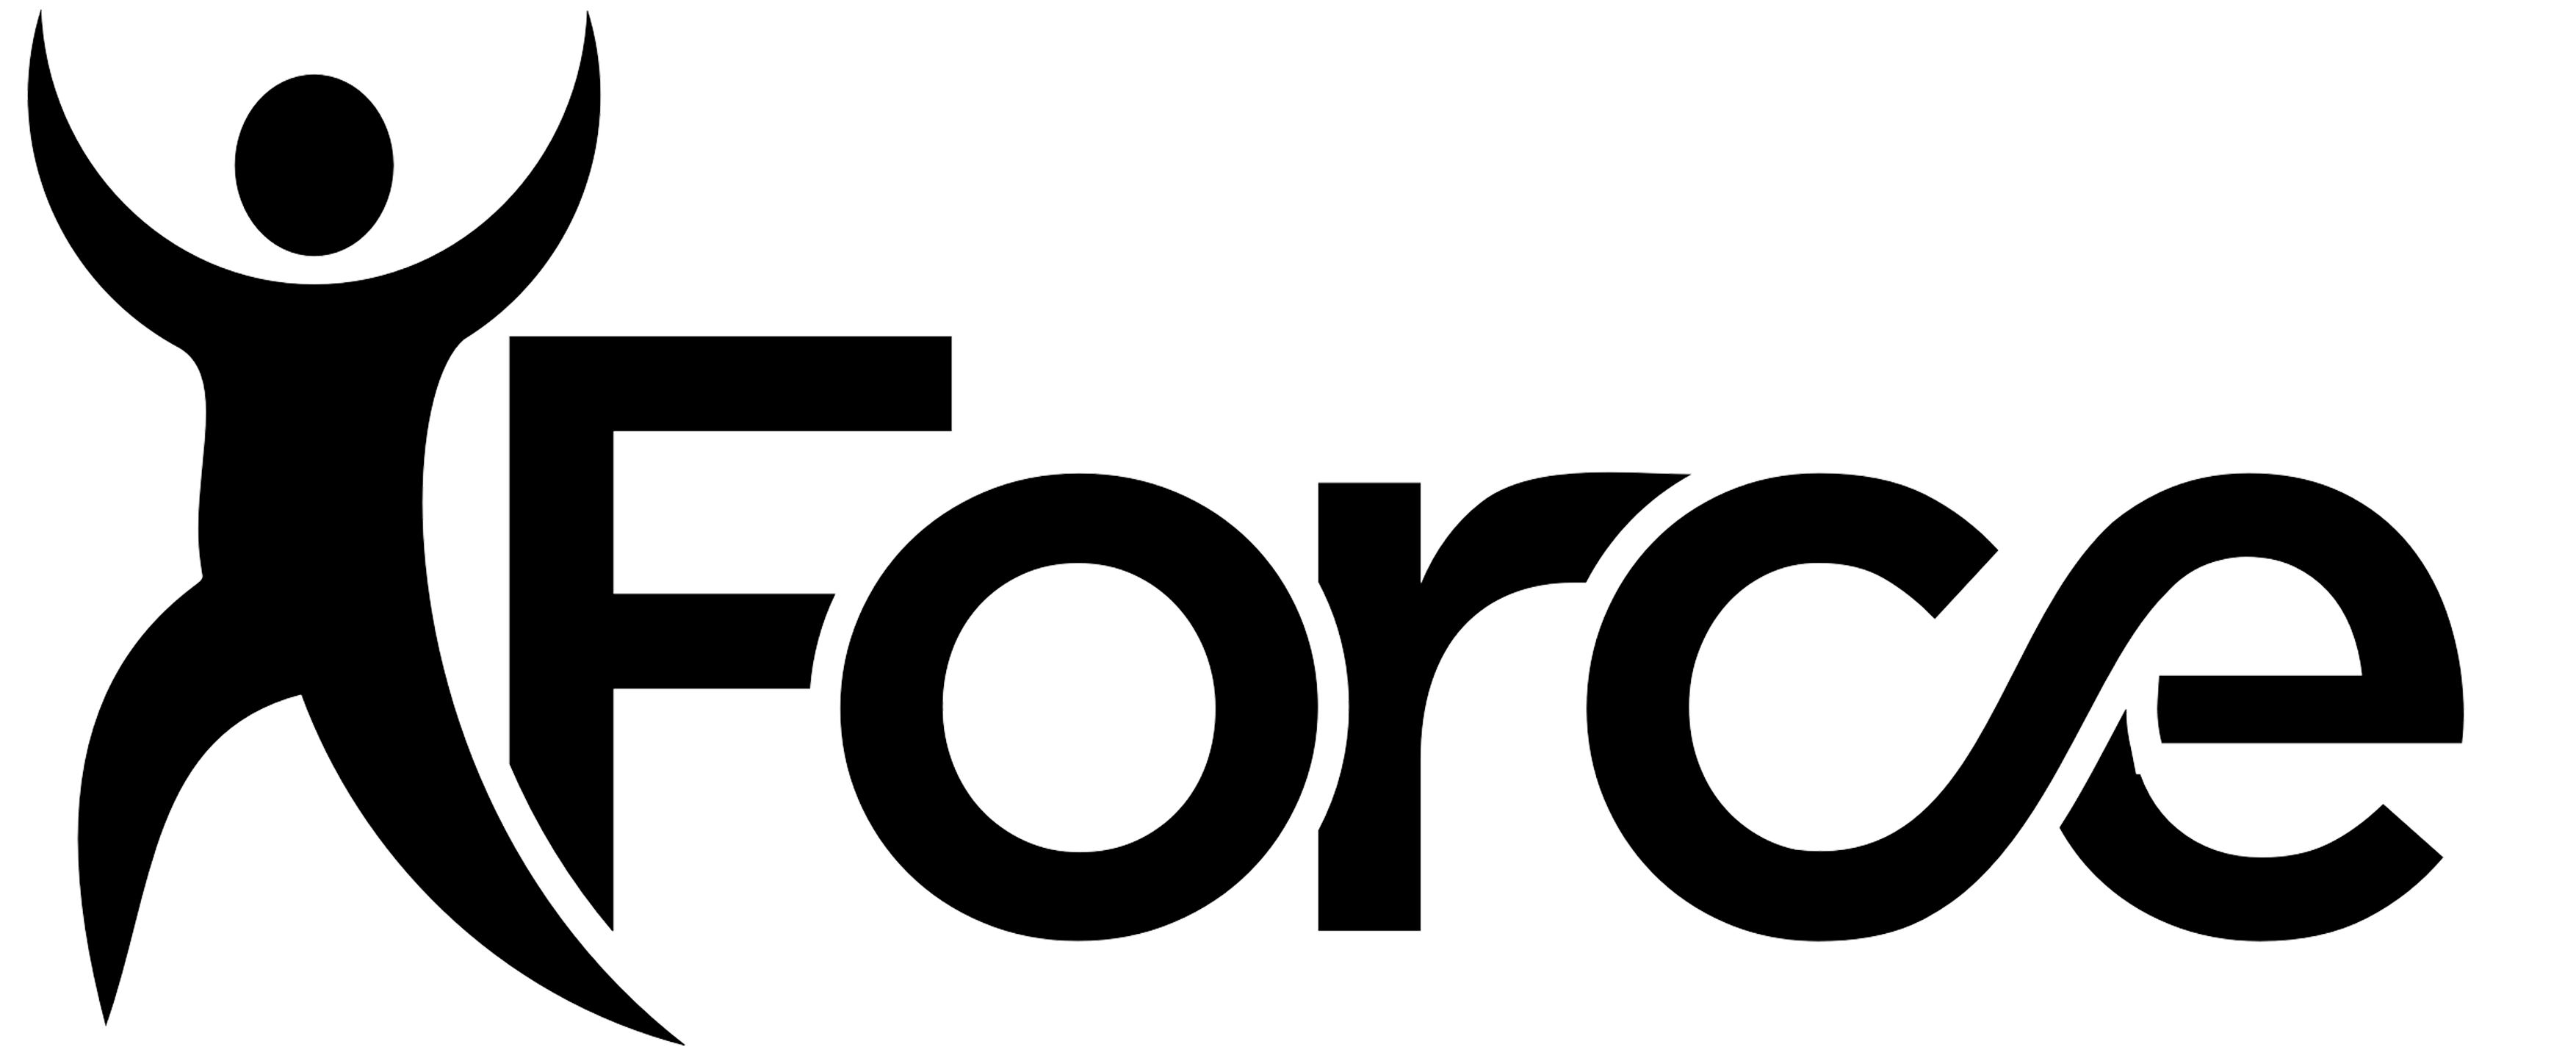 Force Logo - Simple Force Logo